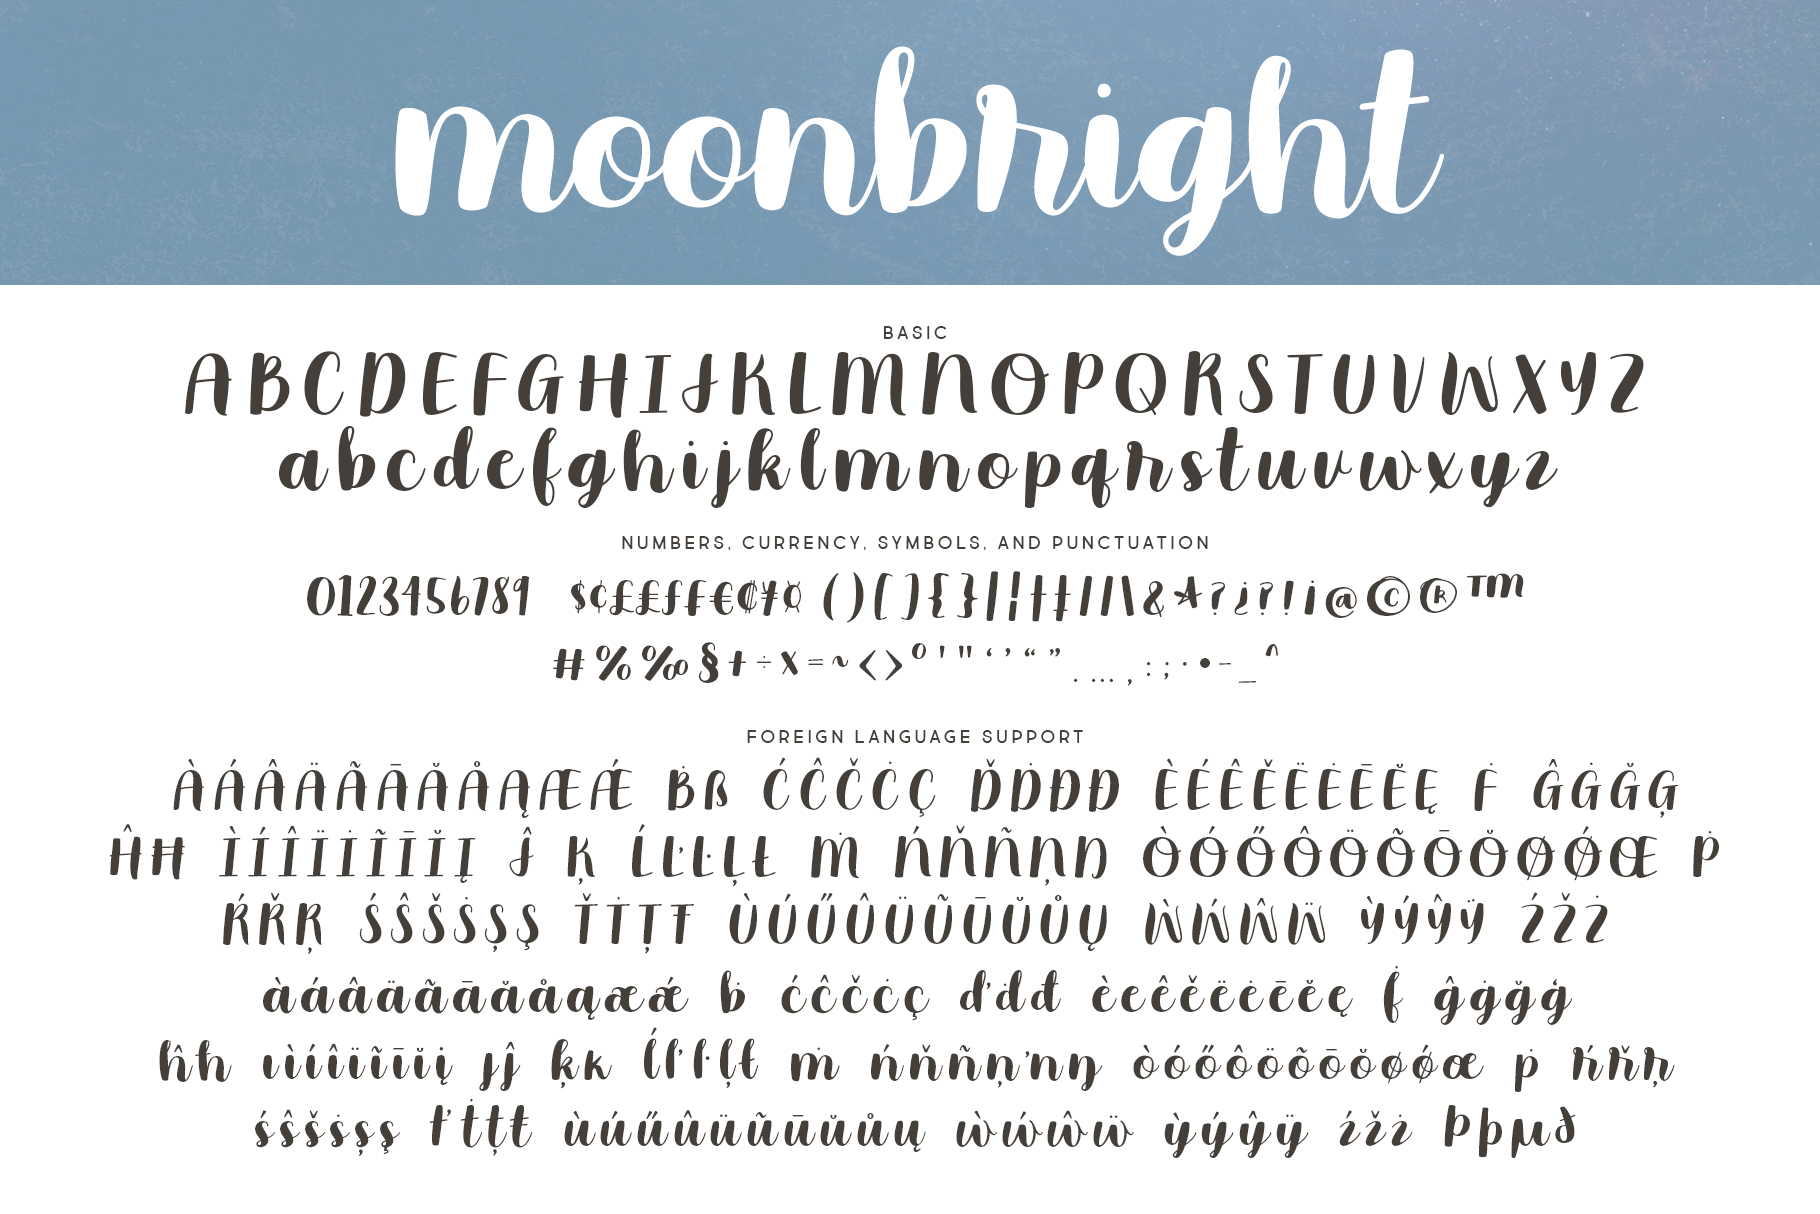 moonbright